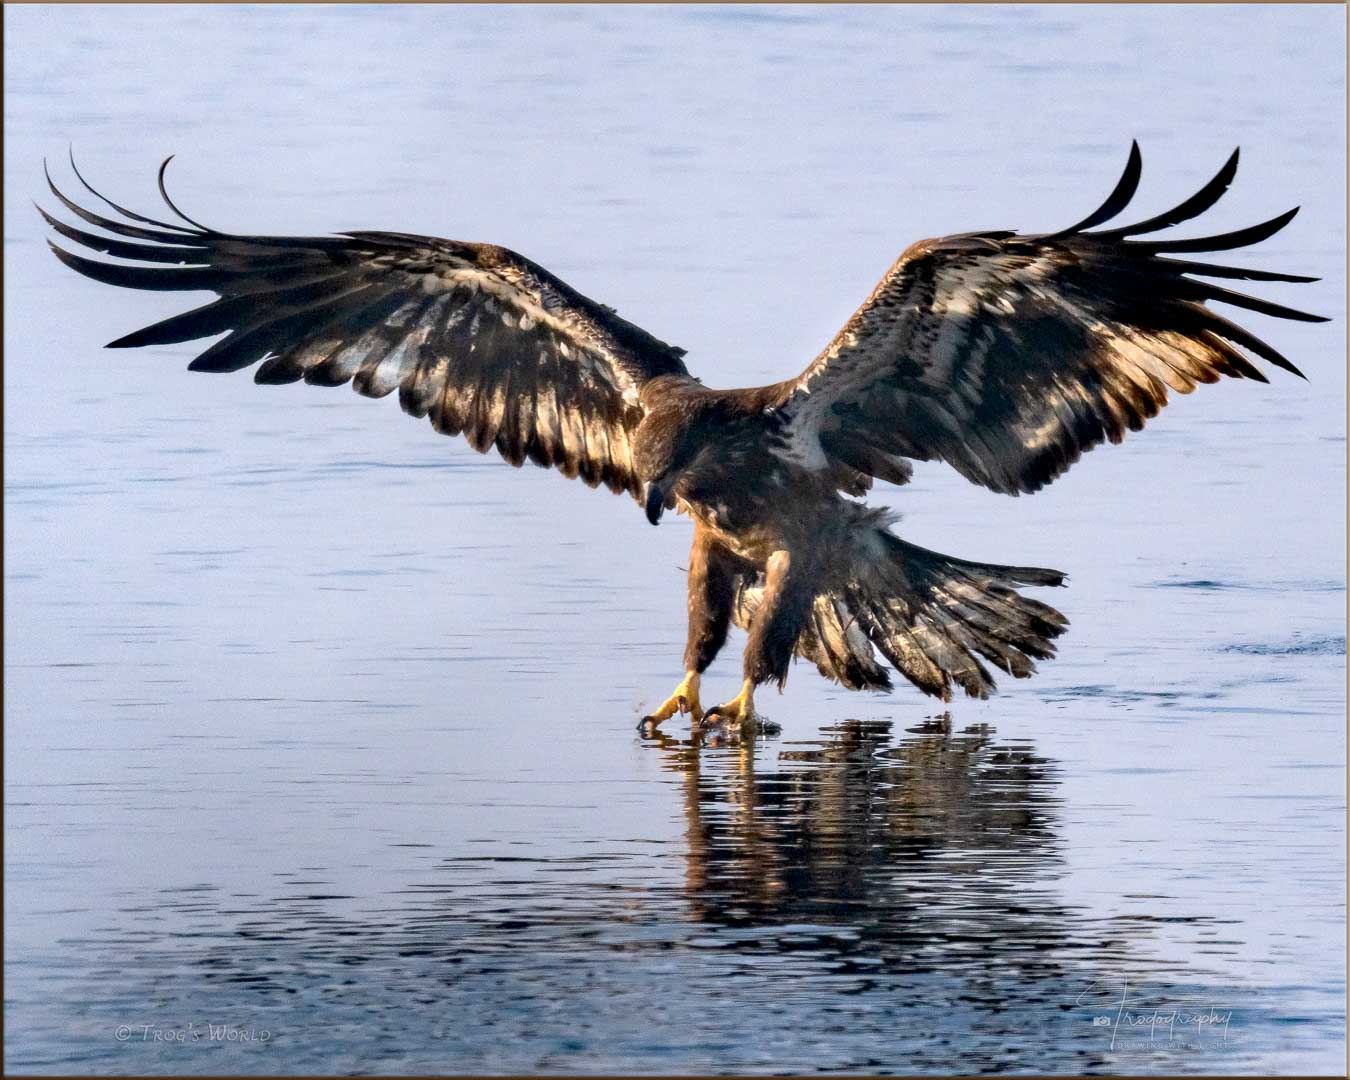 Juvenile Bald Eagle catching a fish